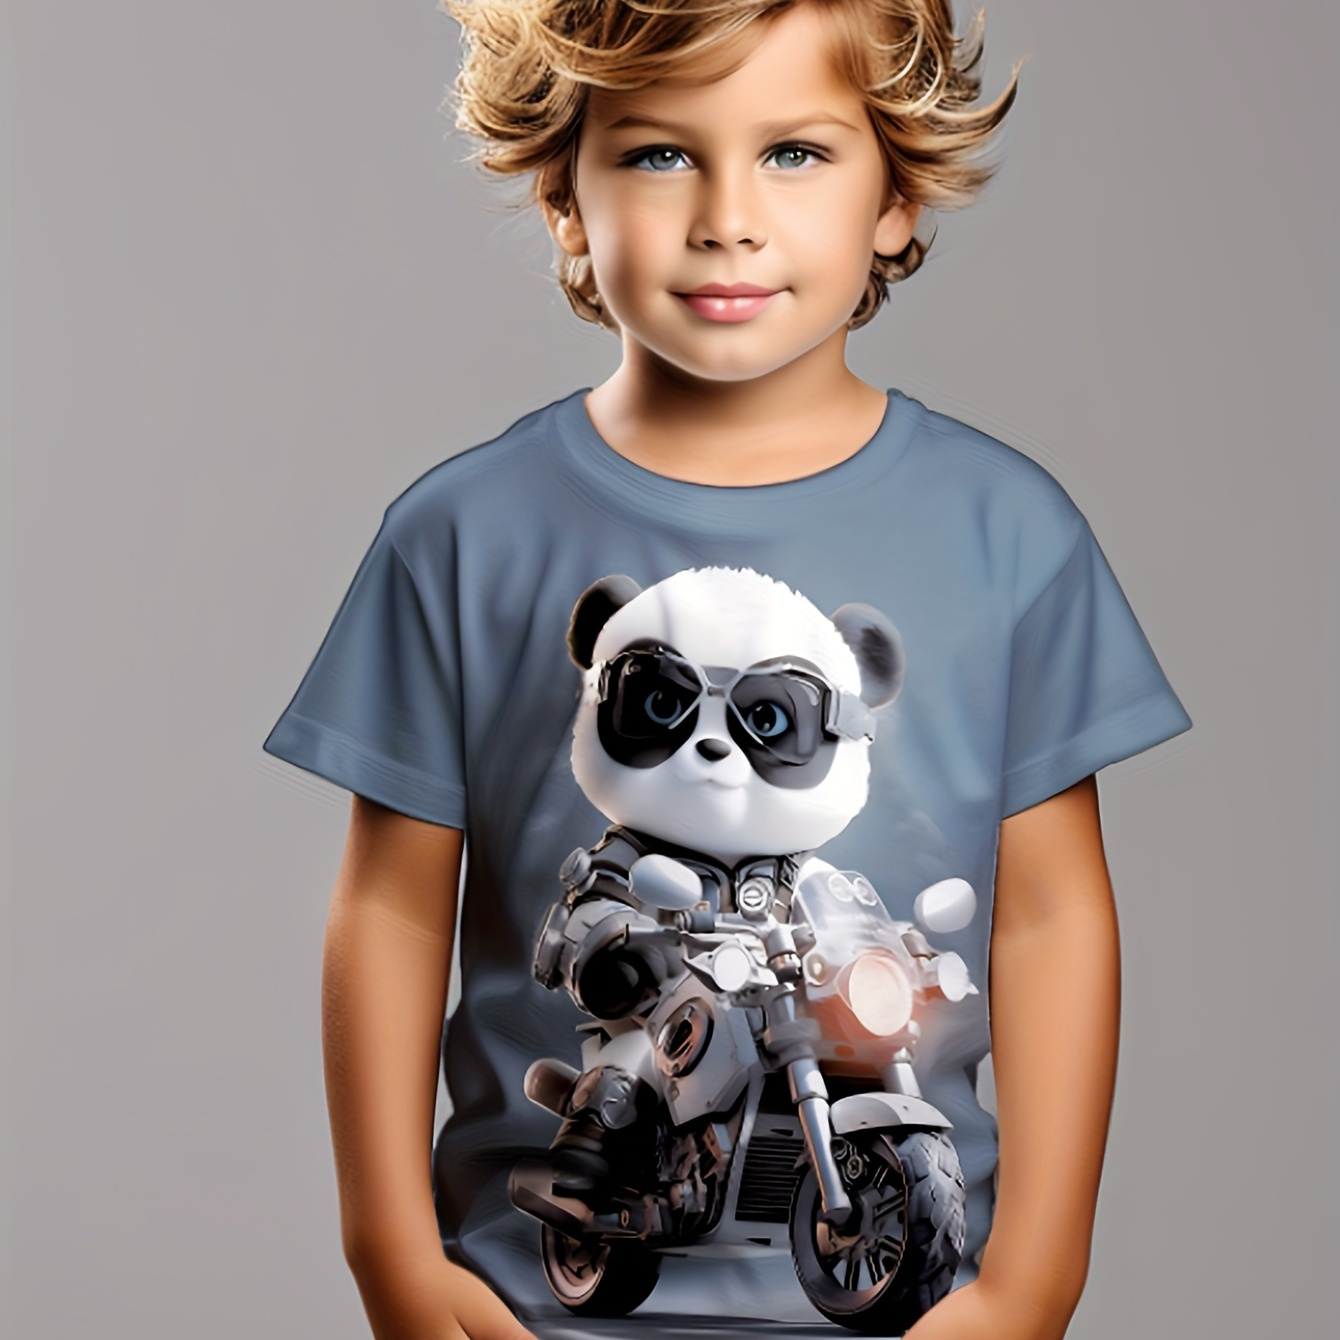 

Cute Panda Riding Motorcycle 3d Print Boy's Creative T-shirt, Casual Versatile Short Sleeve Top, Summer Clothes